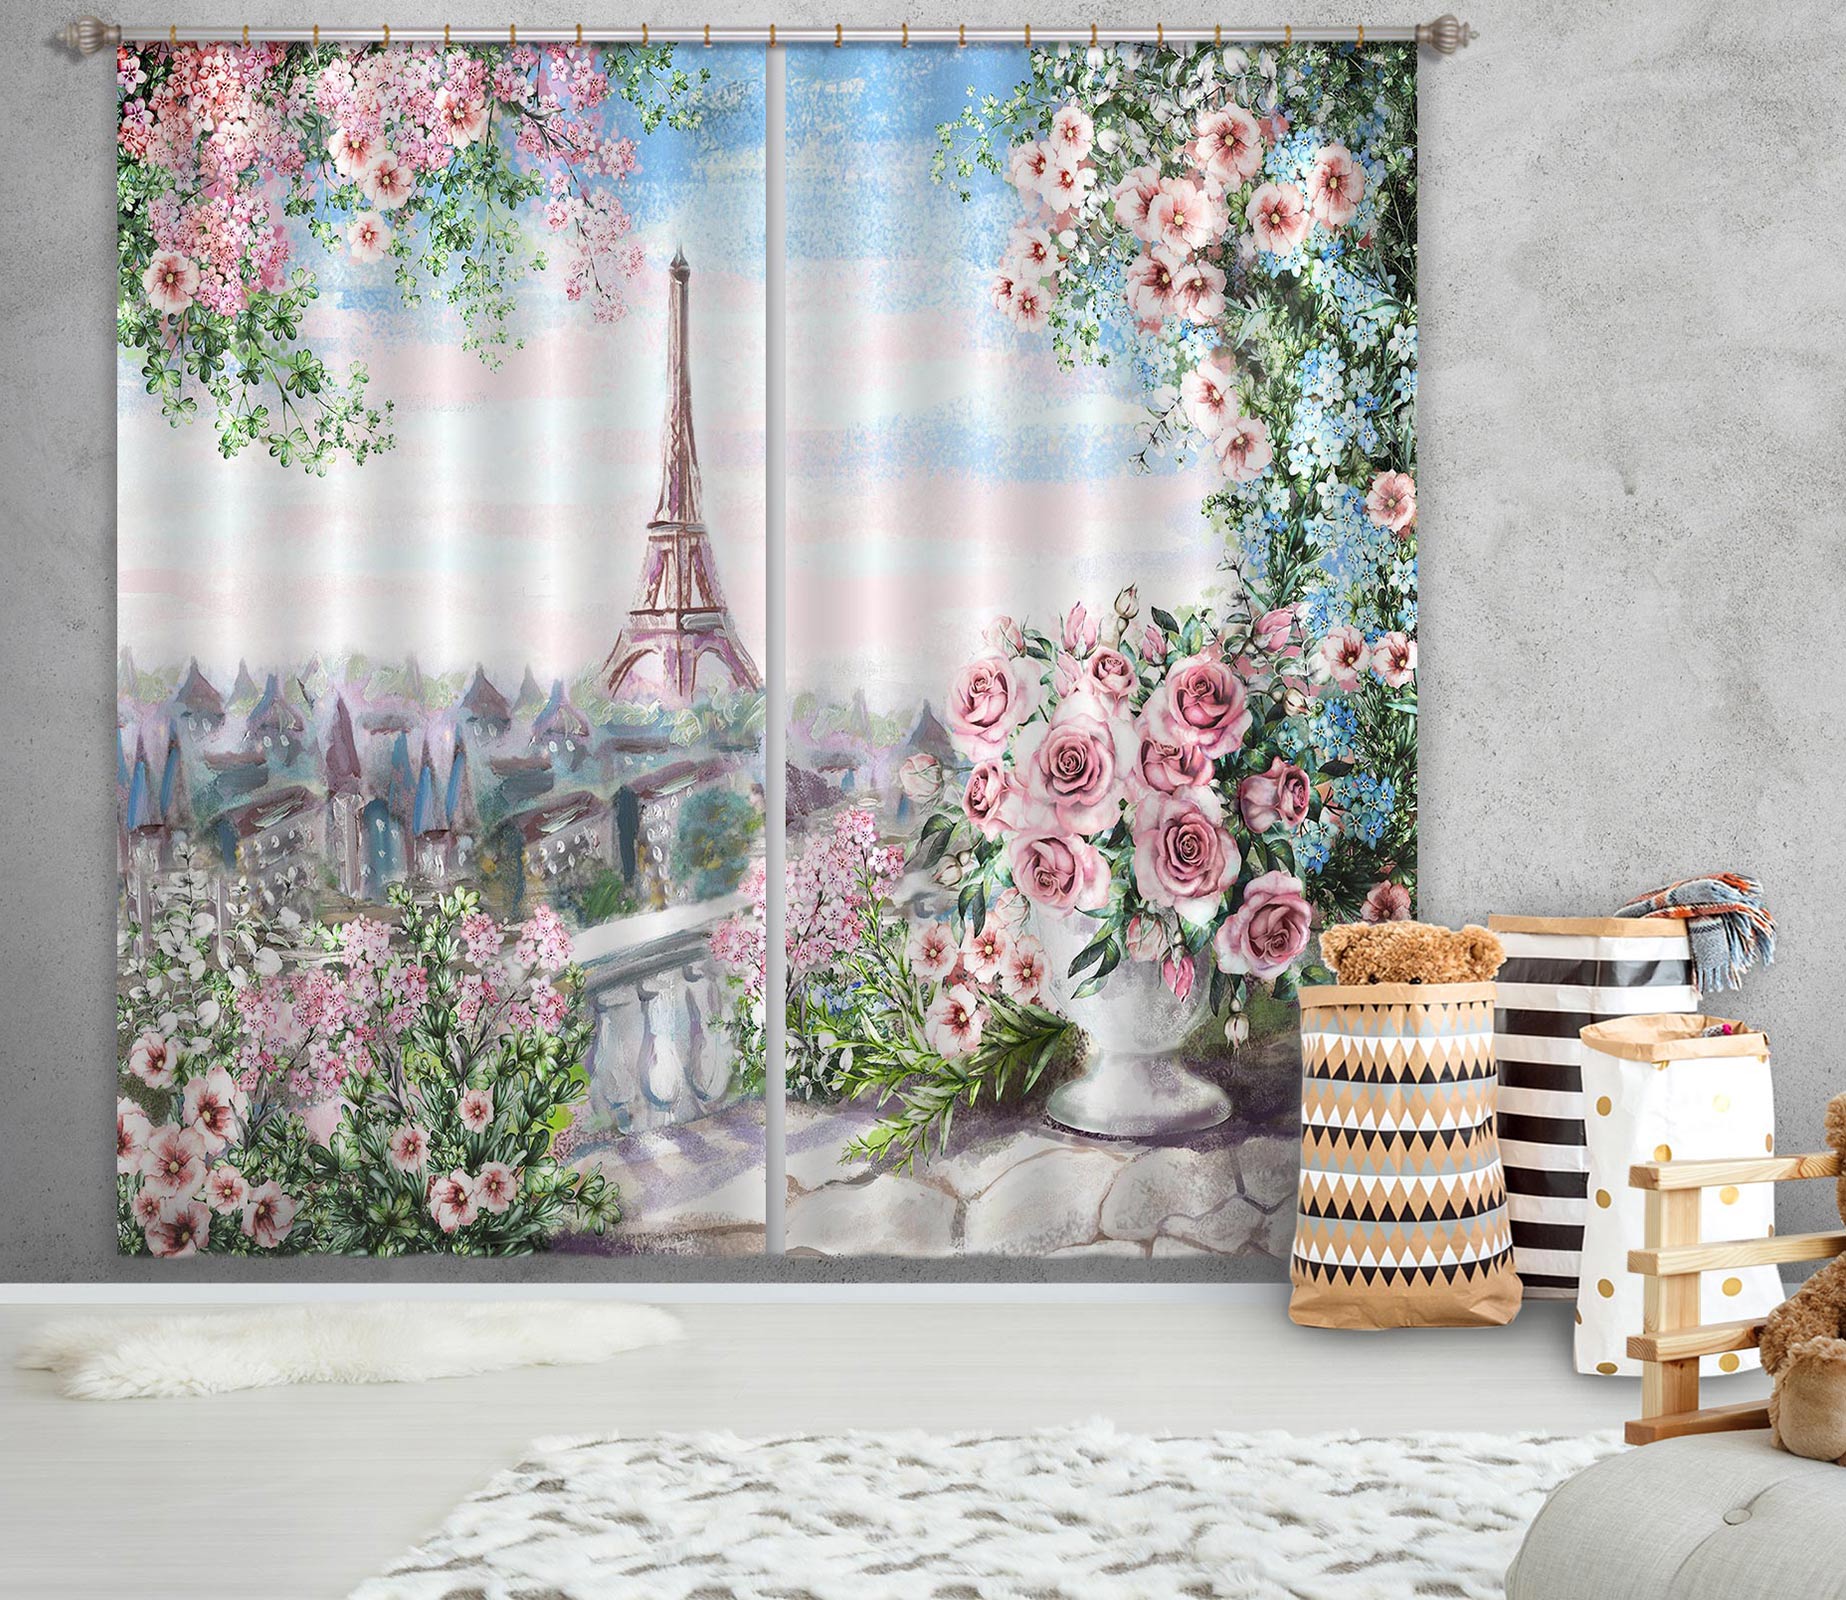 3D Rose Eiffel Tower 042 Curtains Drapes